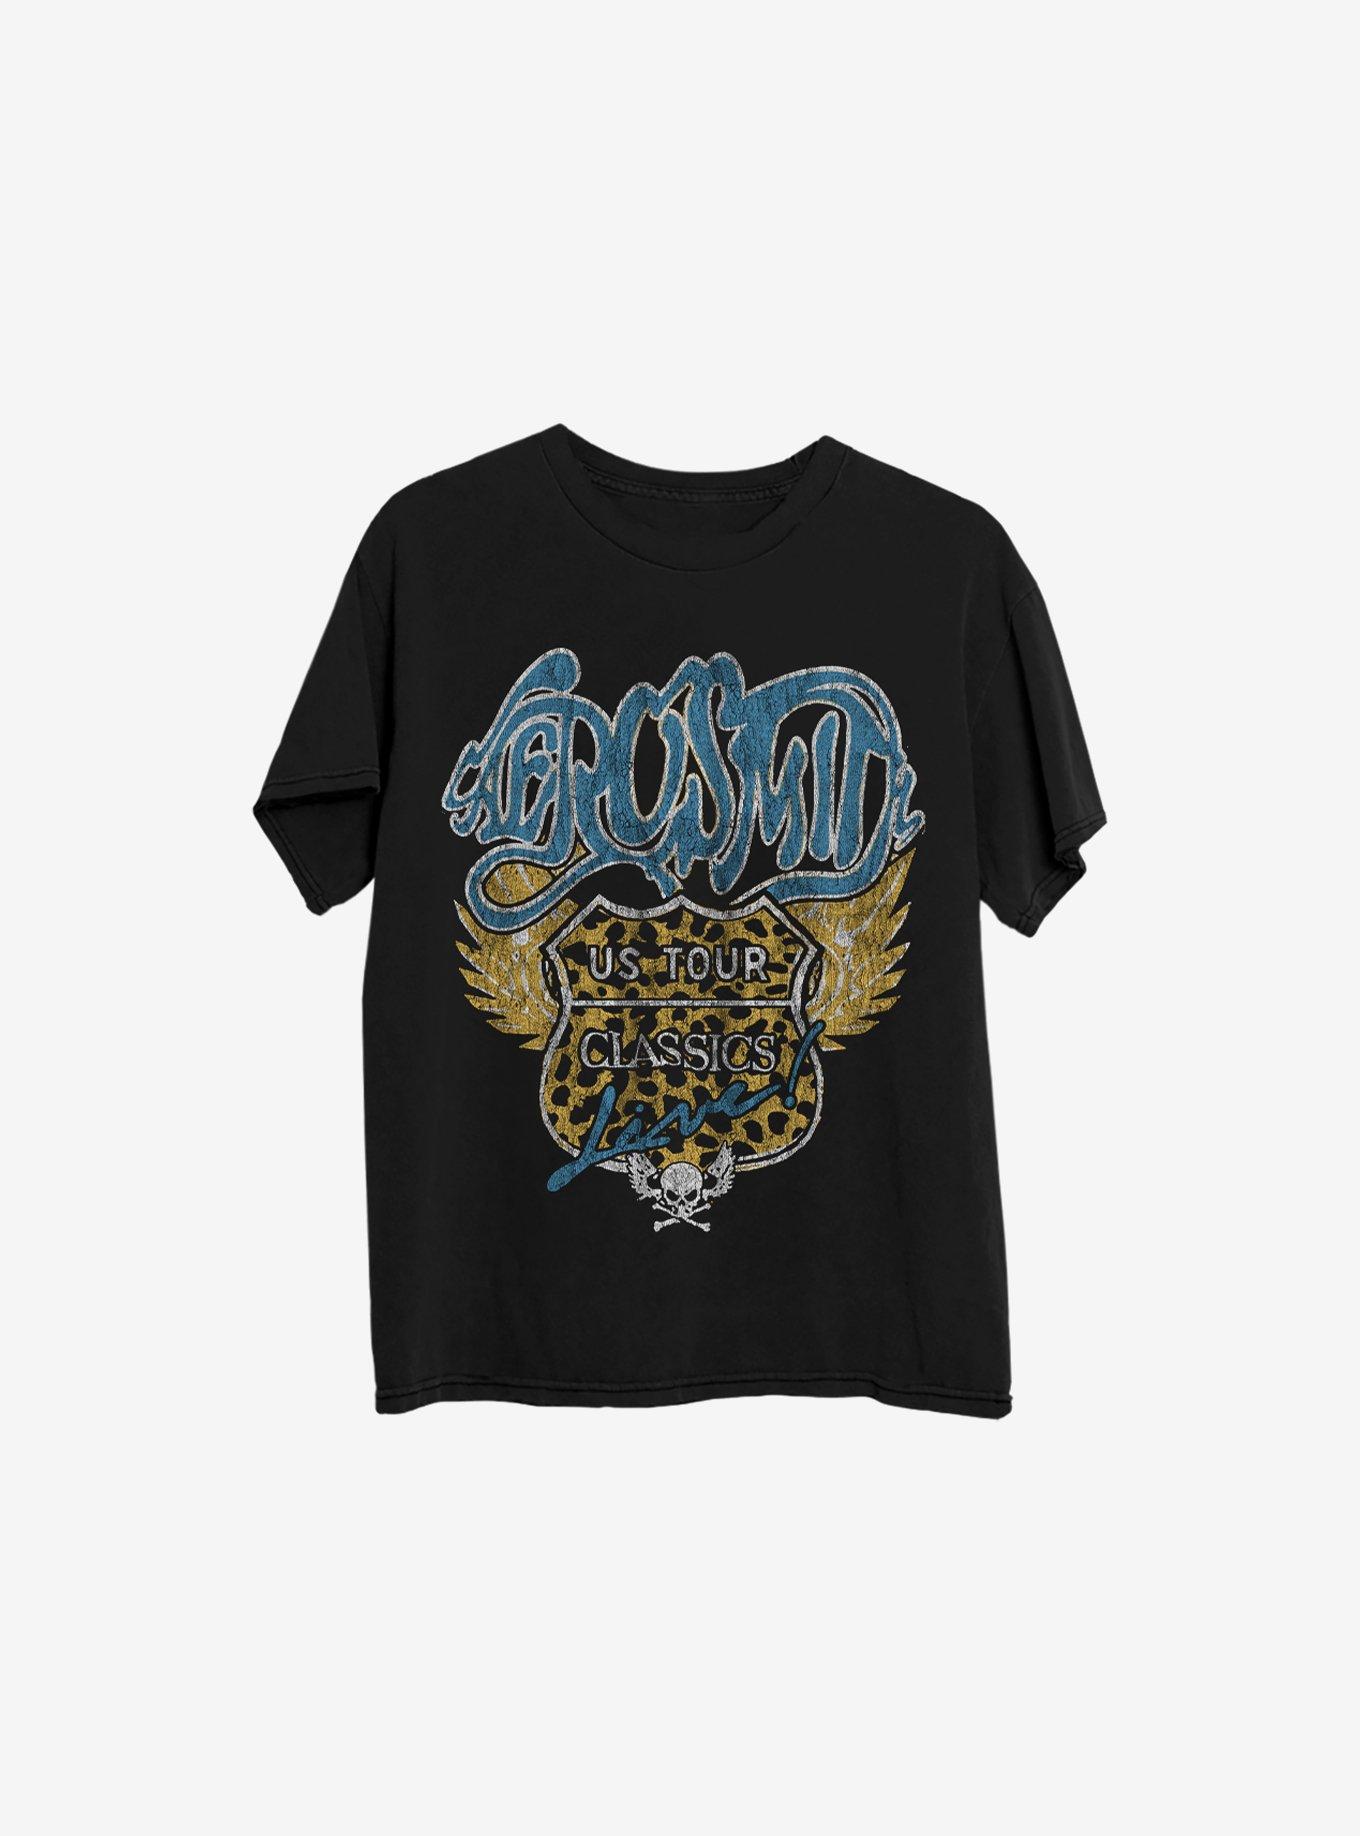 Aerosmith US Tour Classic Live T-Shirt